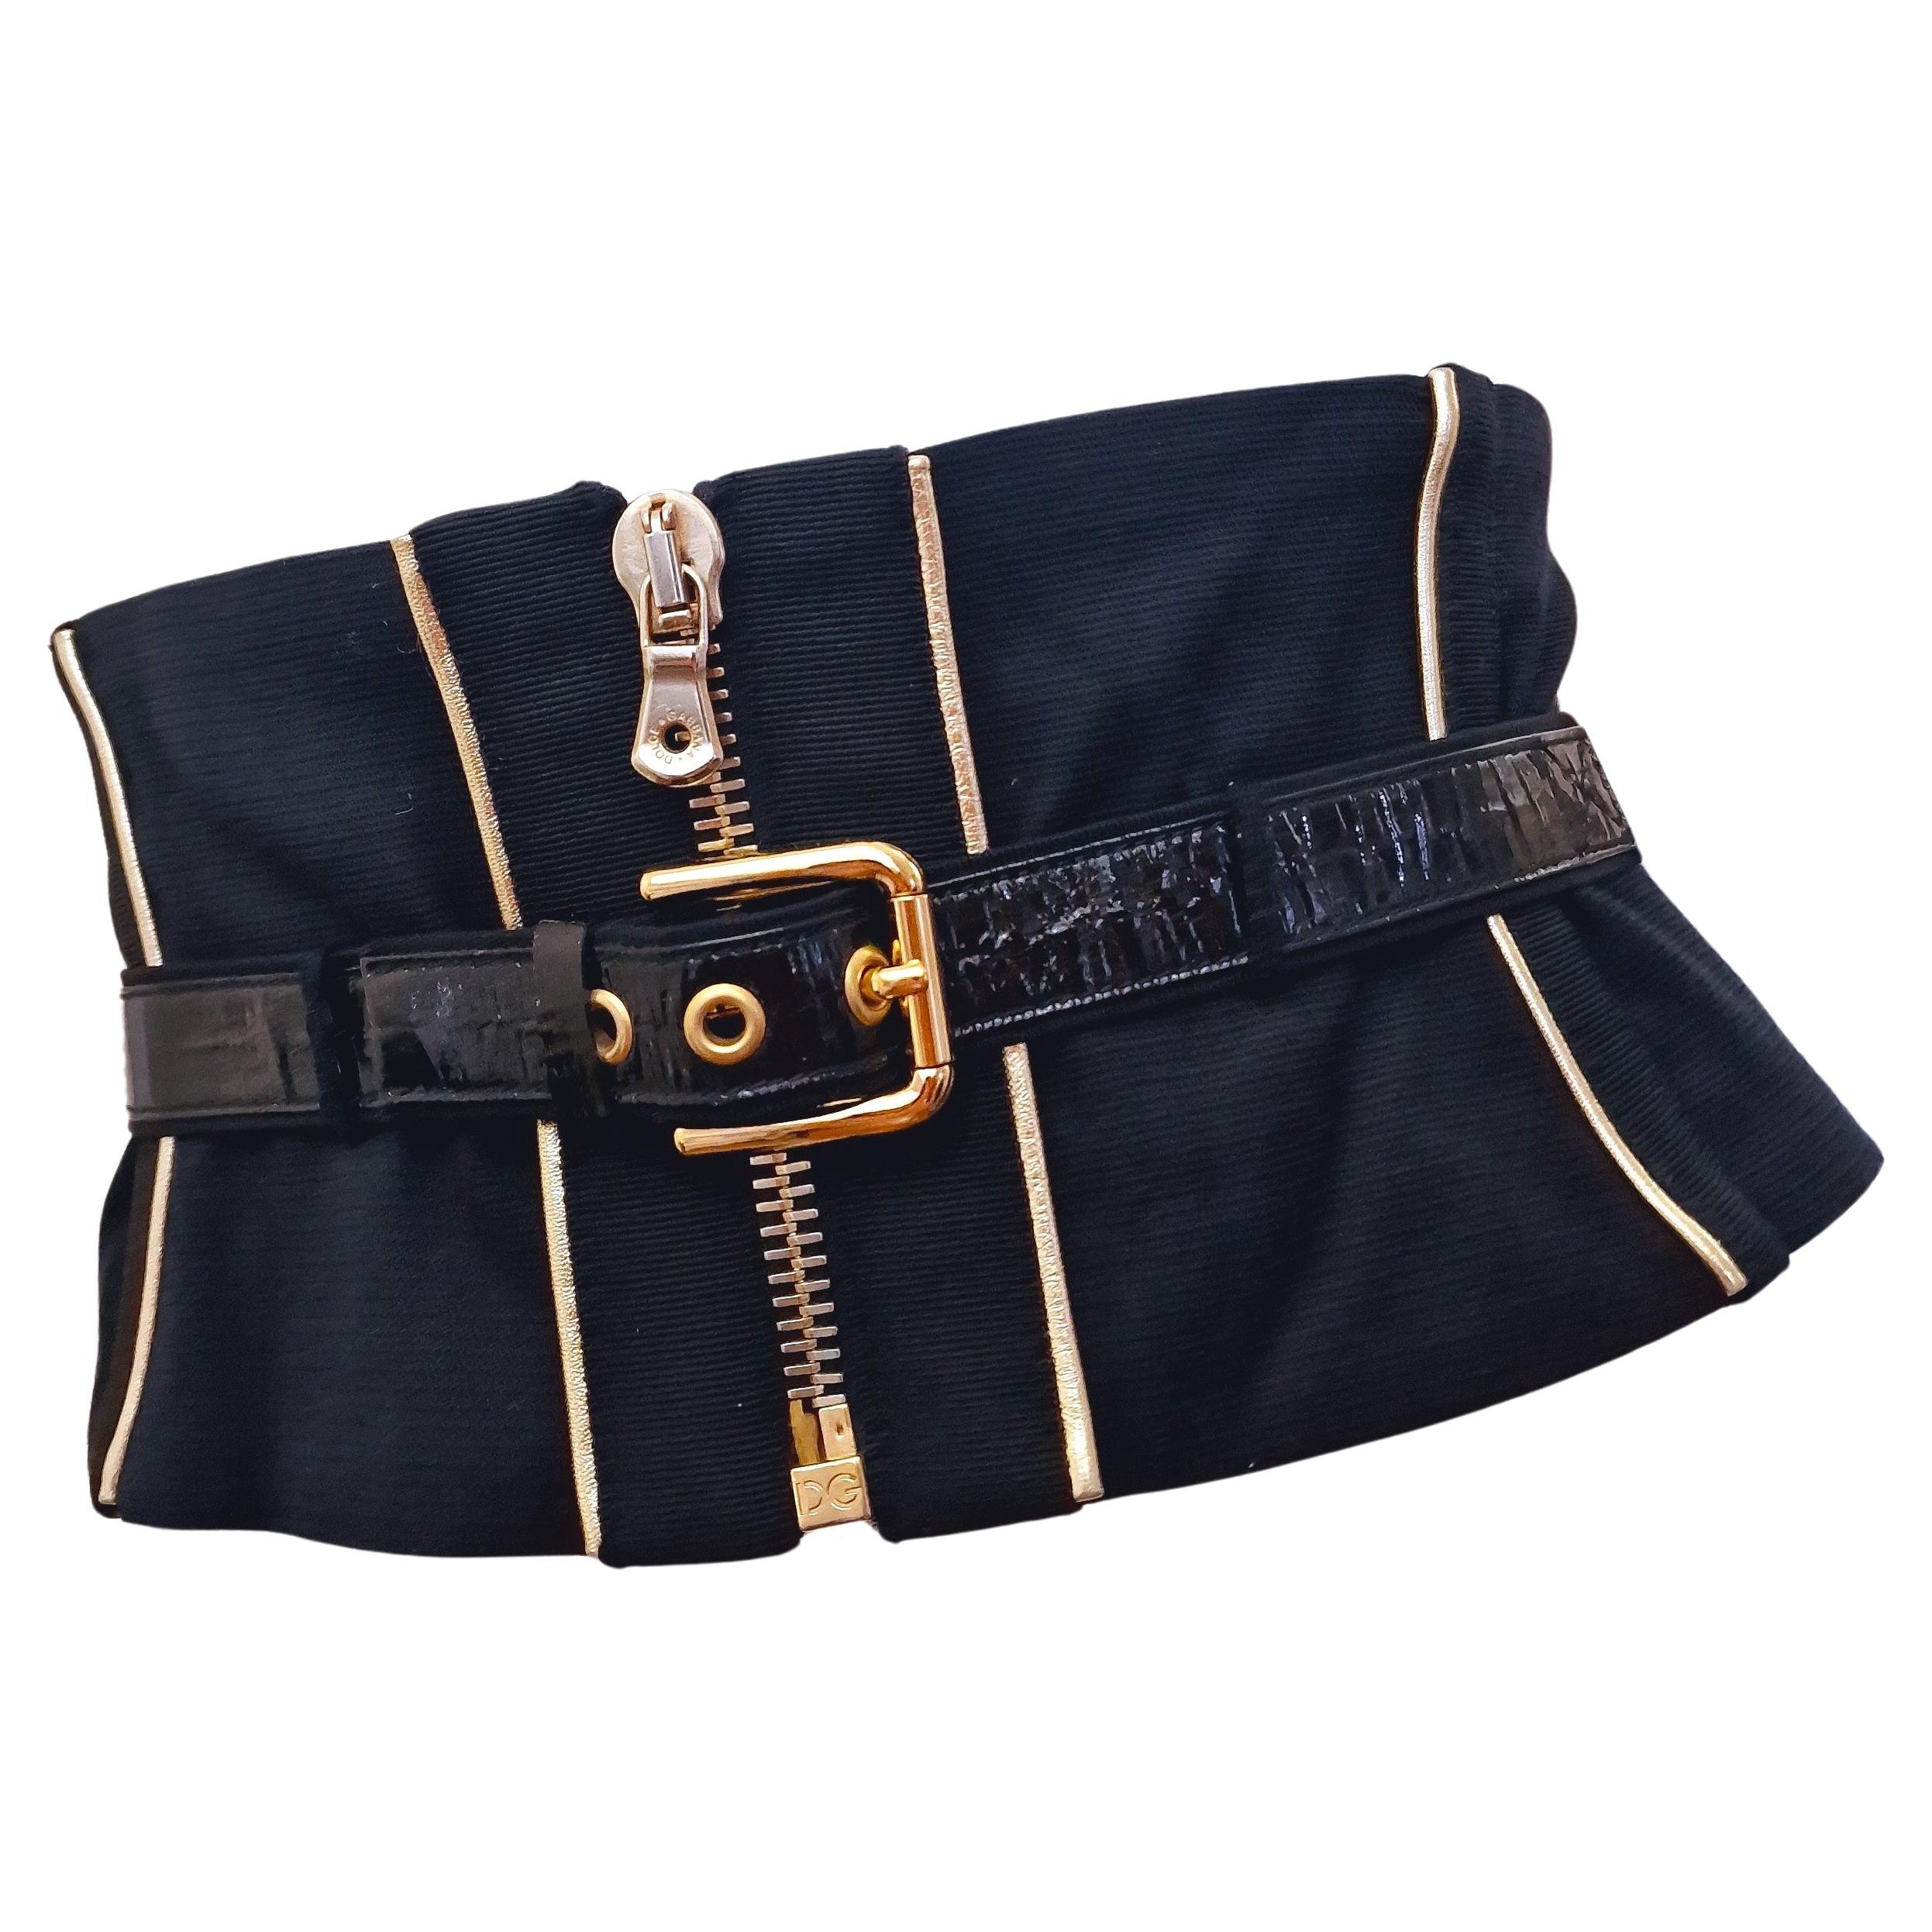 D&G Dolce & Gabbana Metal Leather Gold Bondage Black Bustier Top Corset Belt